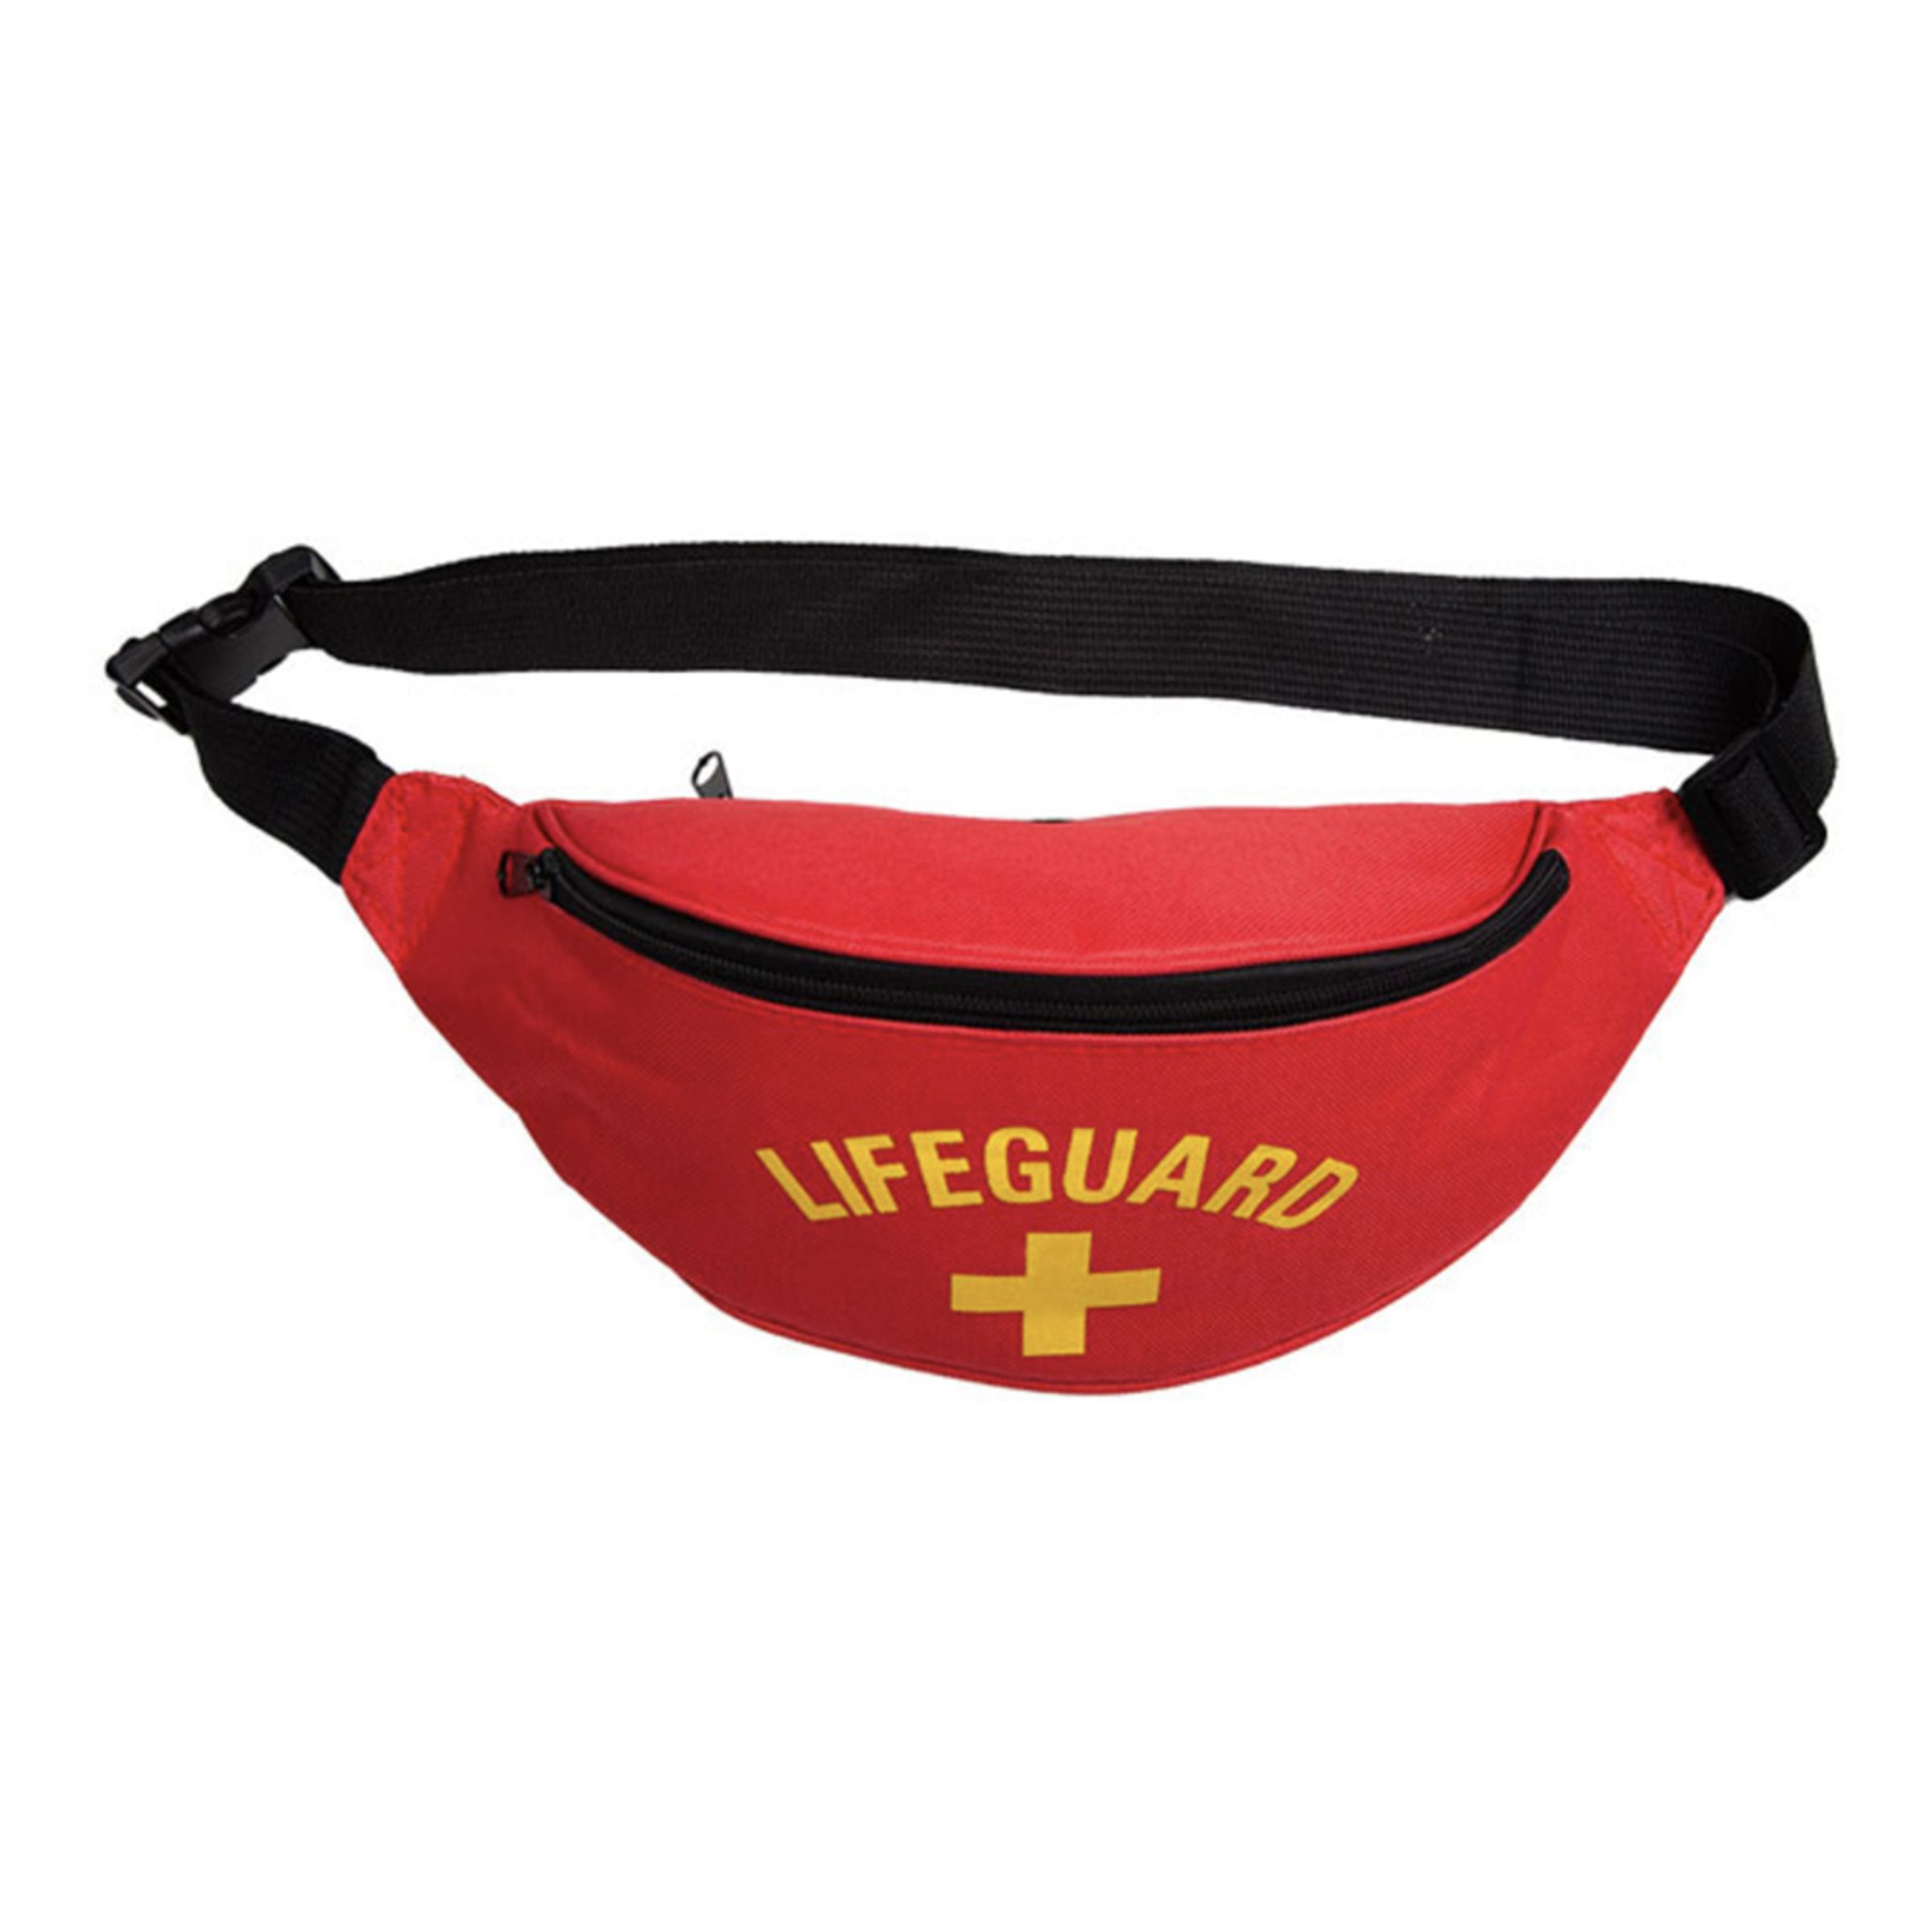 Midjeväska Lifeguard Röd - One size